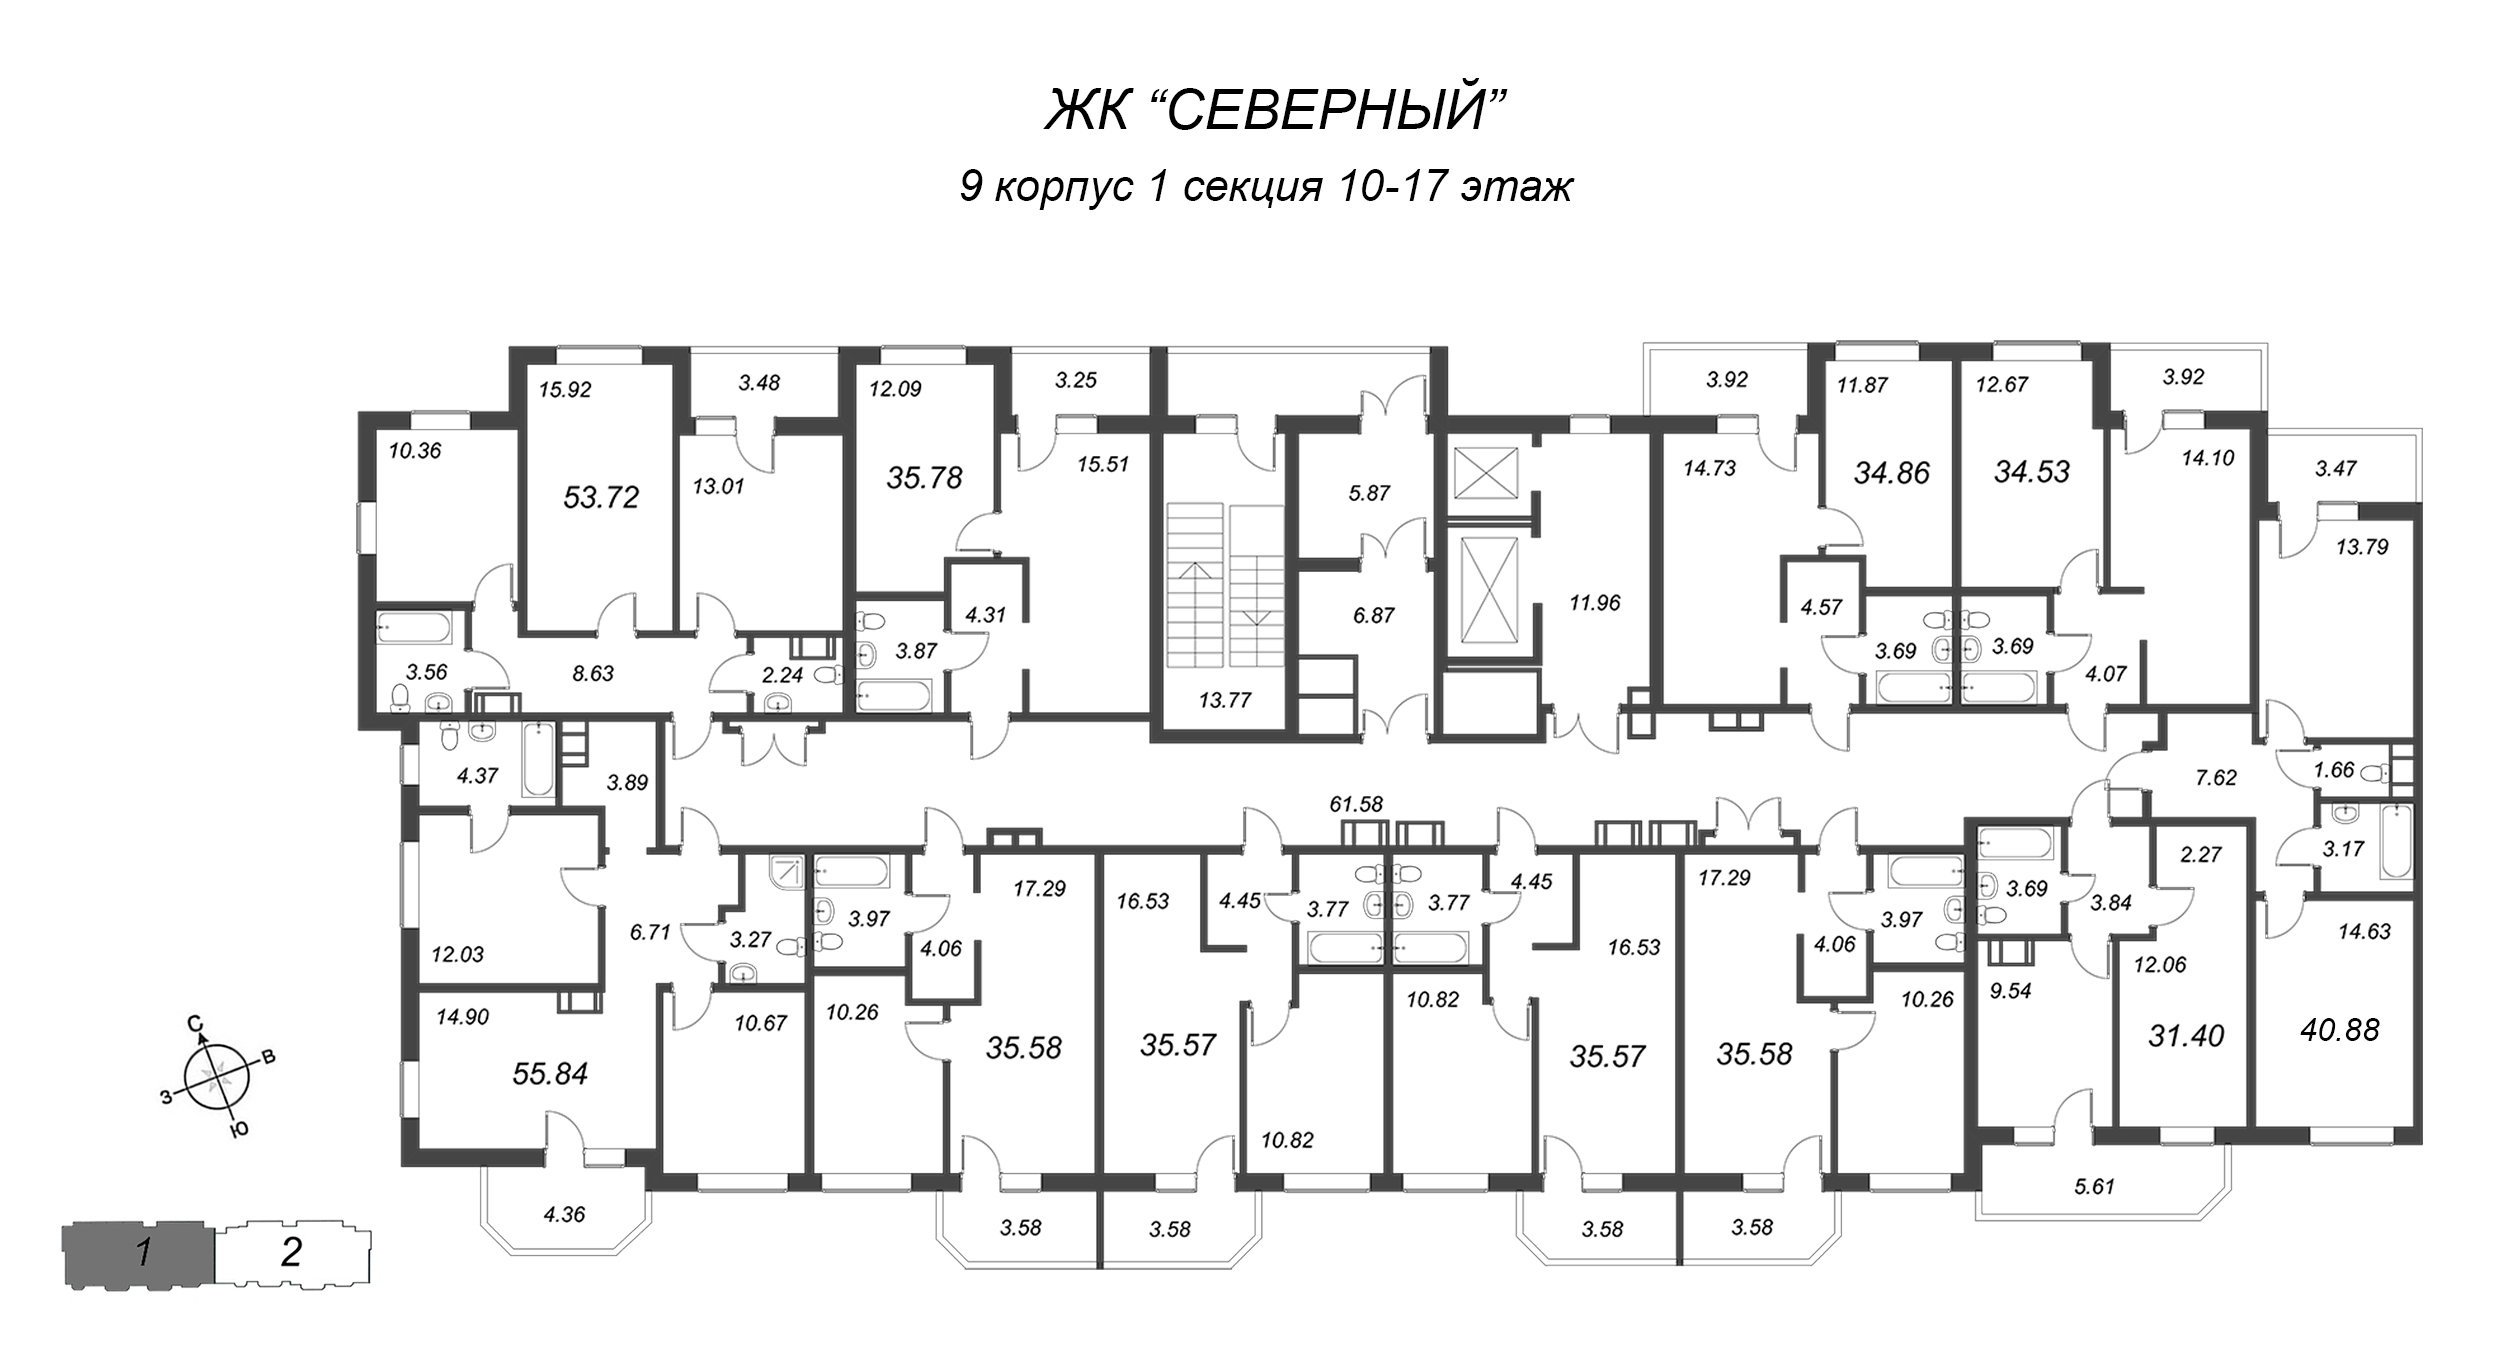 2-комнатная (Евро) квартира, 32.45 м² - планировка этажа